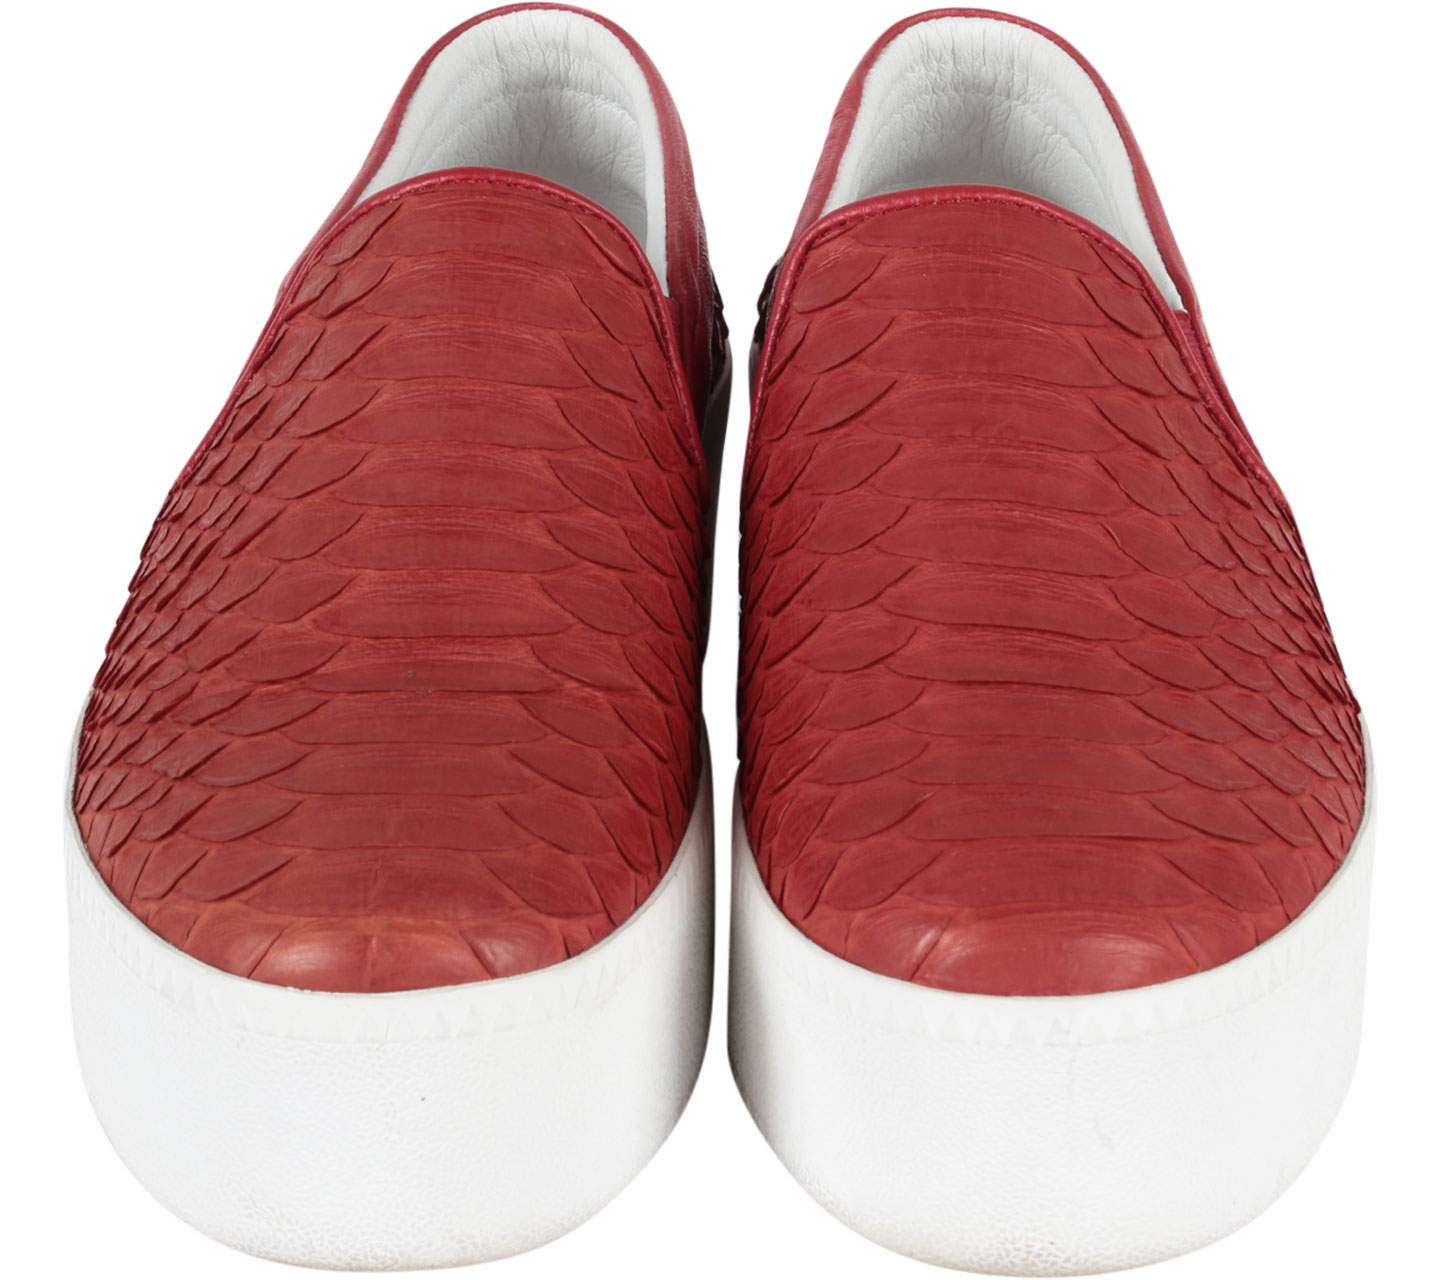 Marnova Red Snakeskin Sneakers